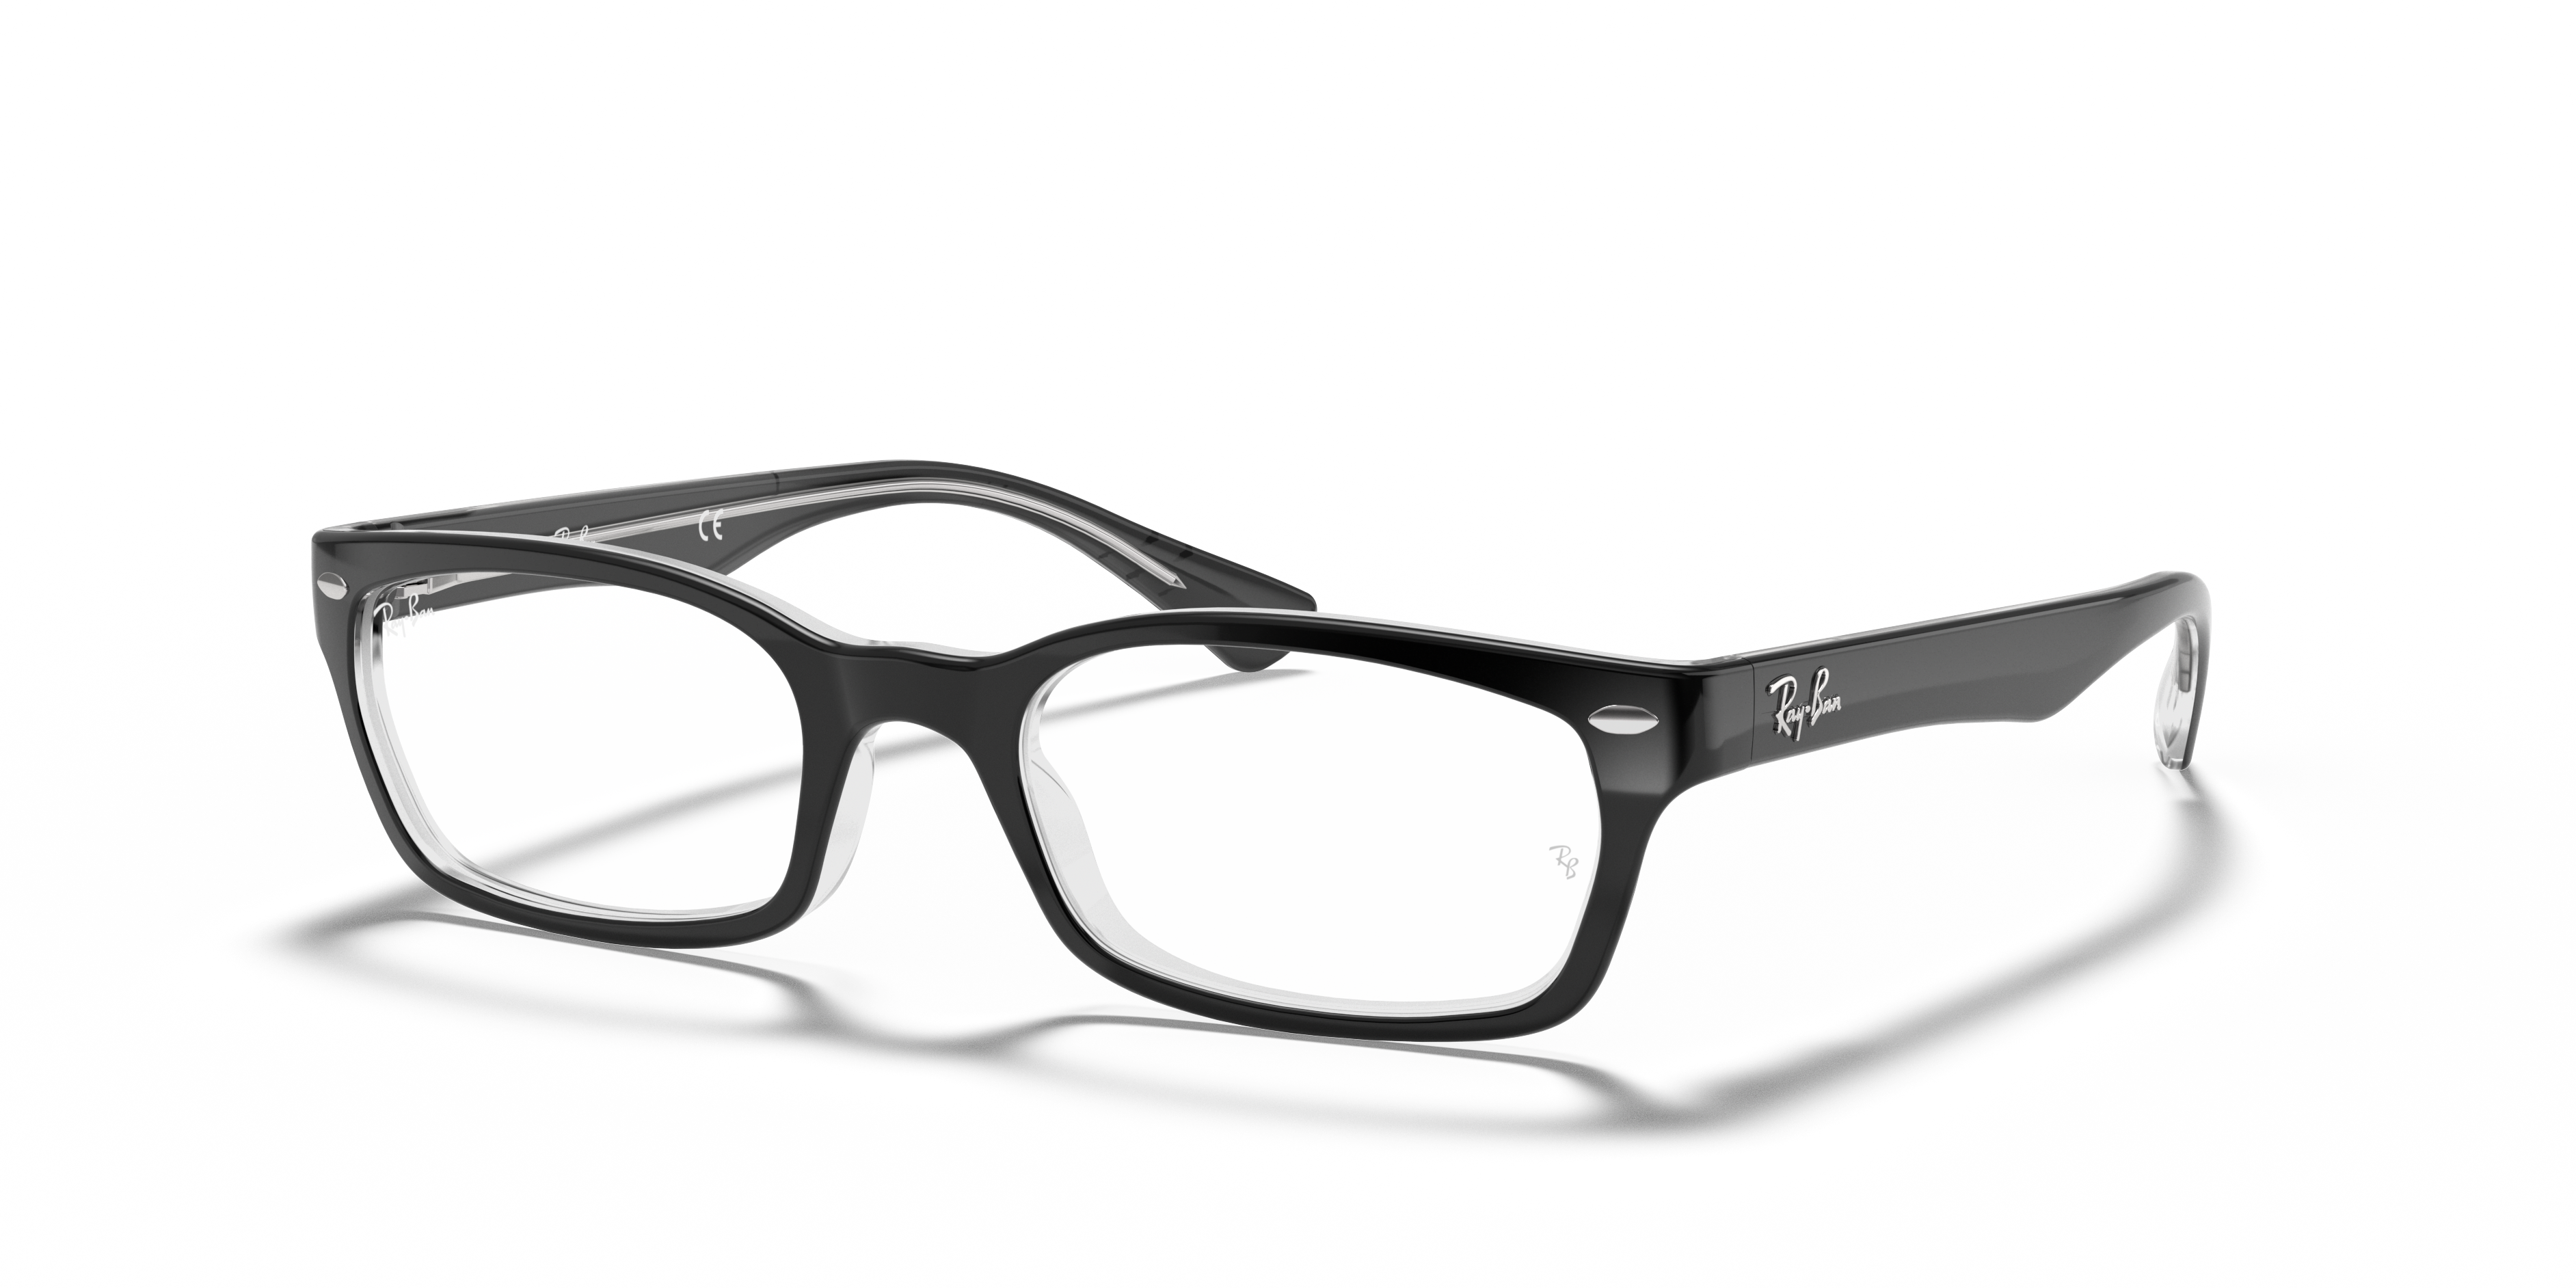 Rb5150 Eyeglasses with Black Frame | Ray-Ban®